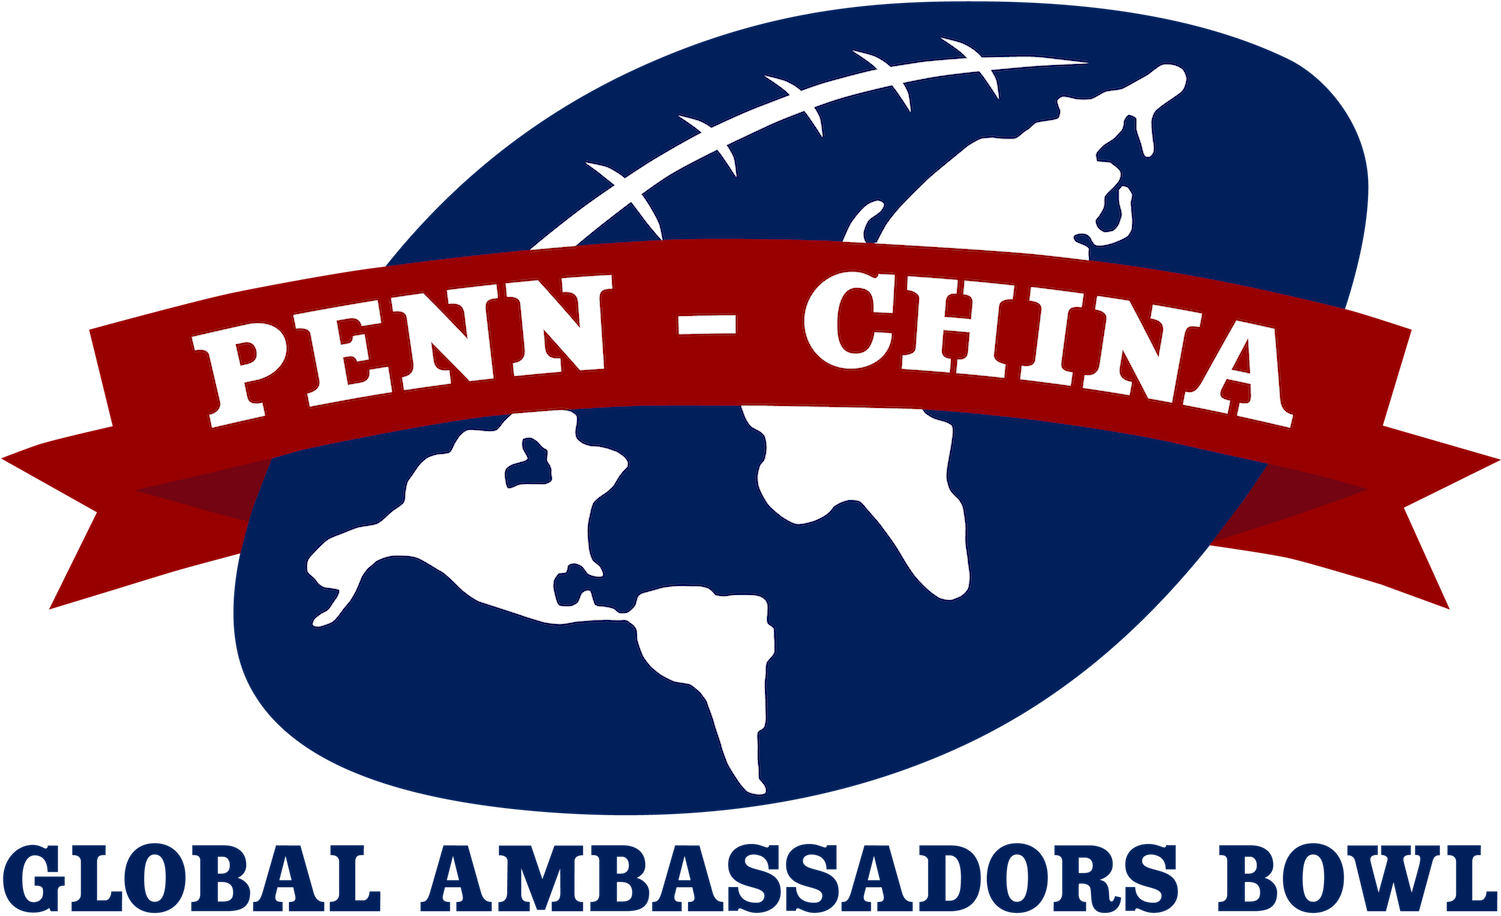 Penn China Global Ambassadors Bowl Logo PNG image